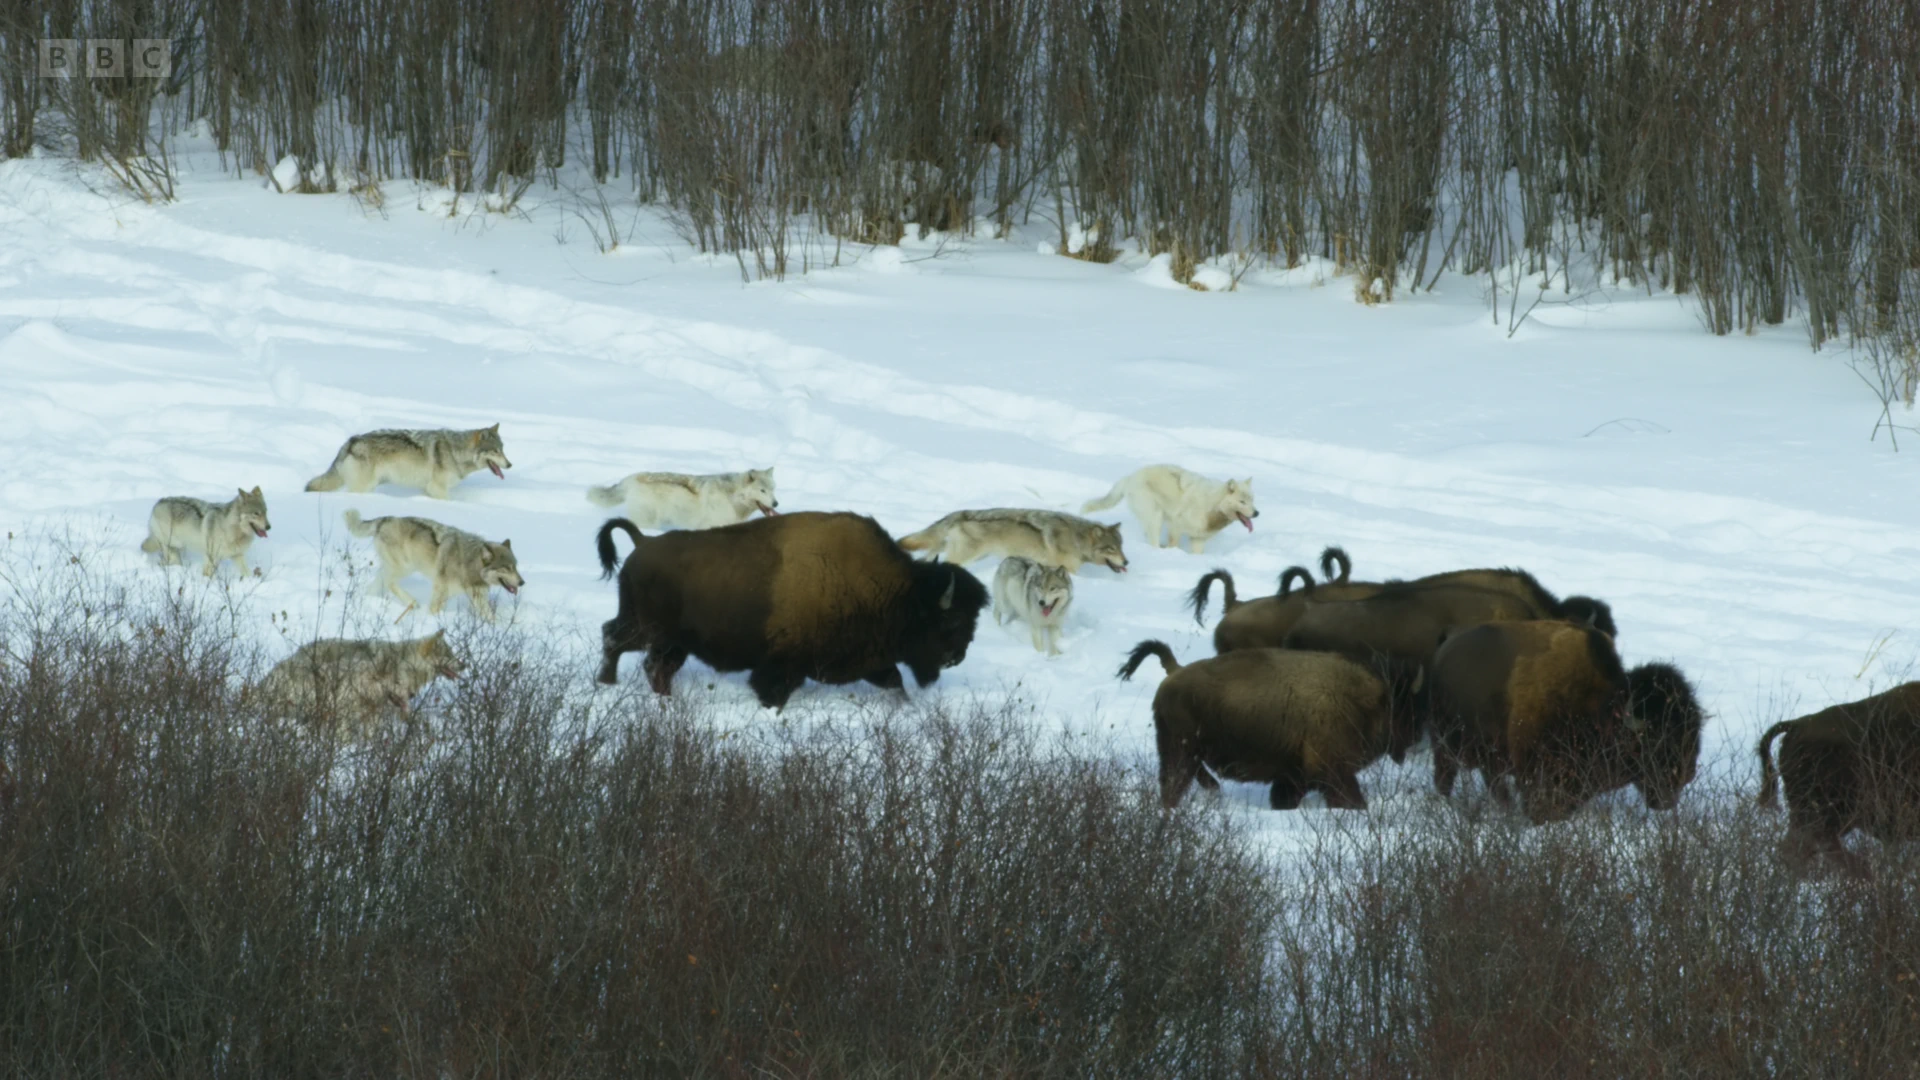 Wood bison (Bison bison athabascae) as shown in Frozen Planet II - Frozen Lands